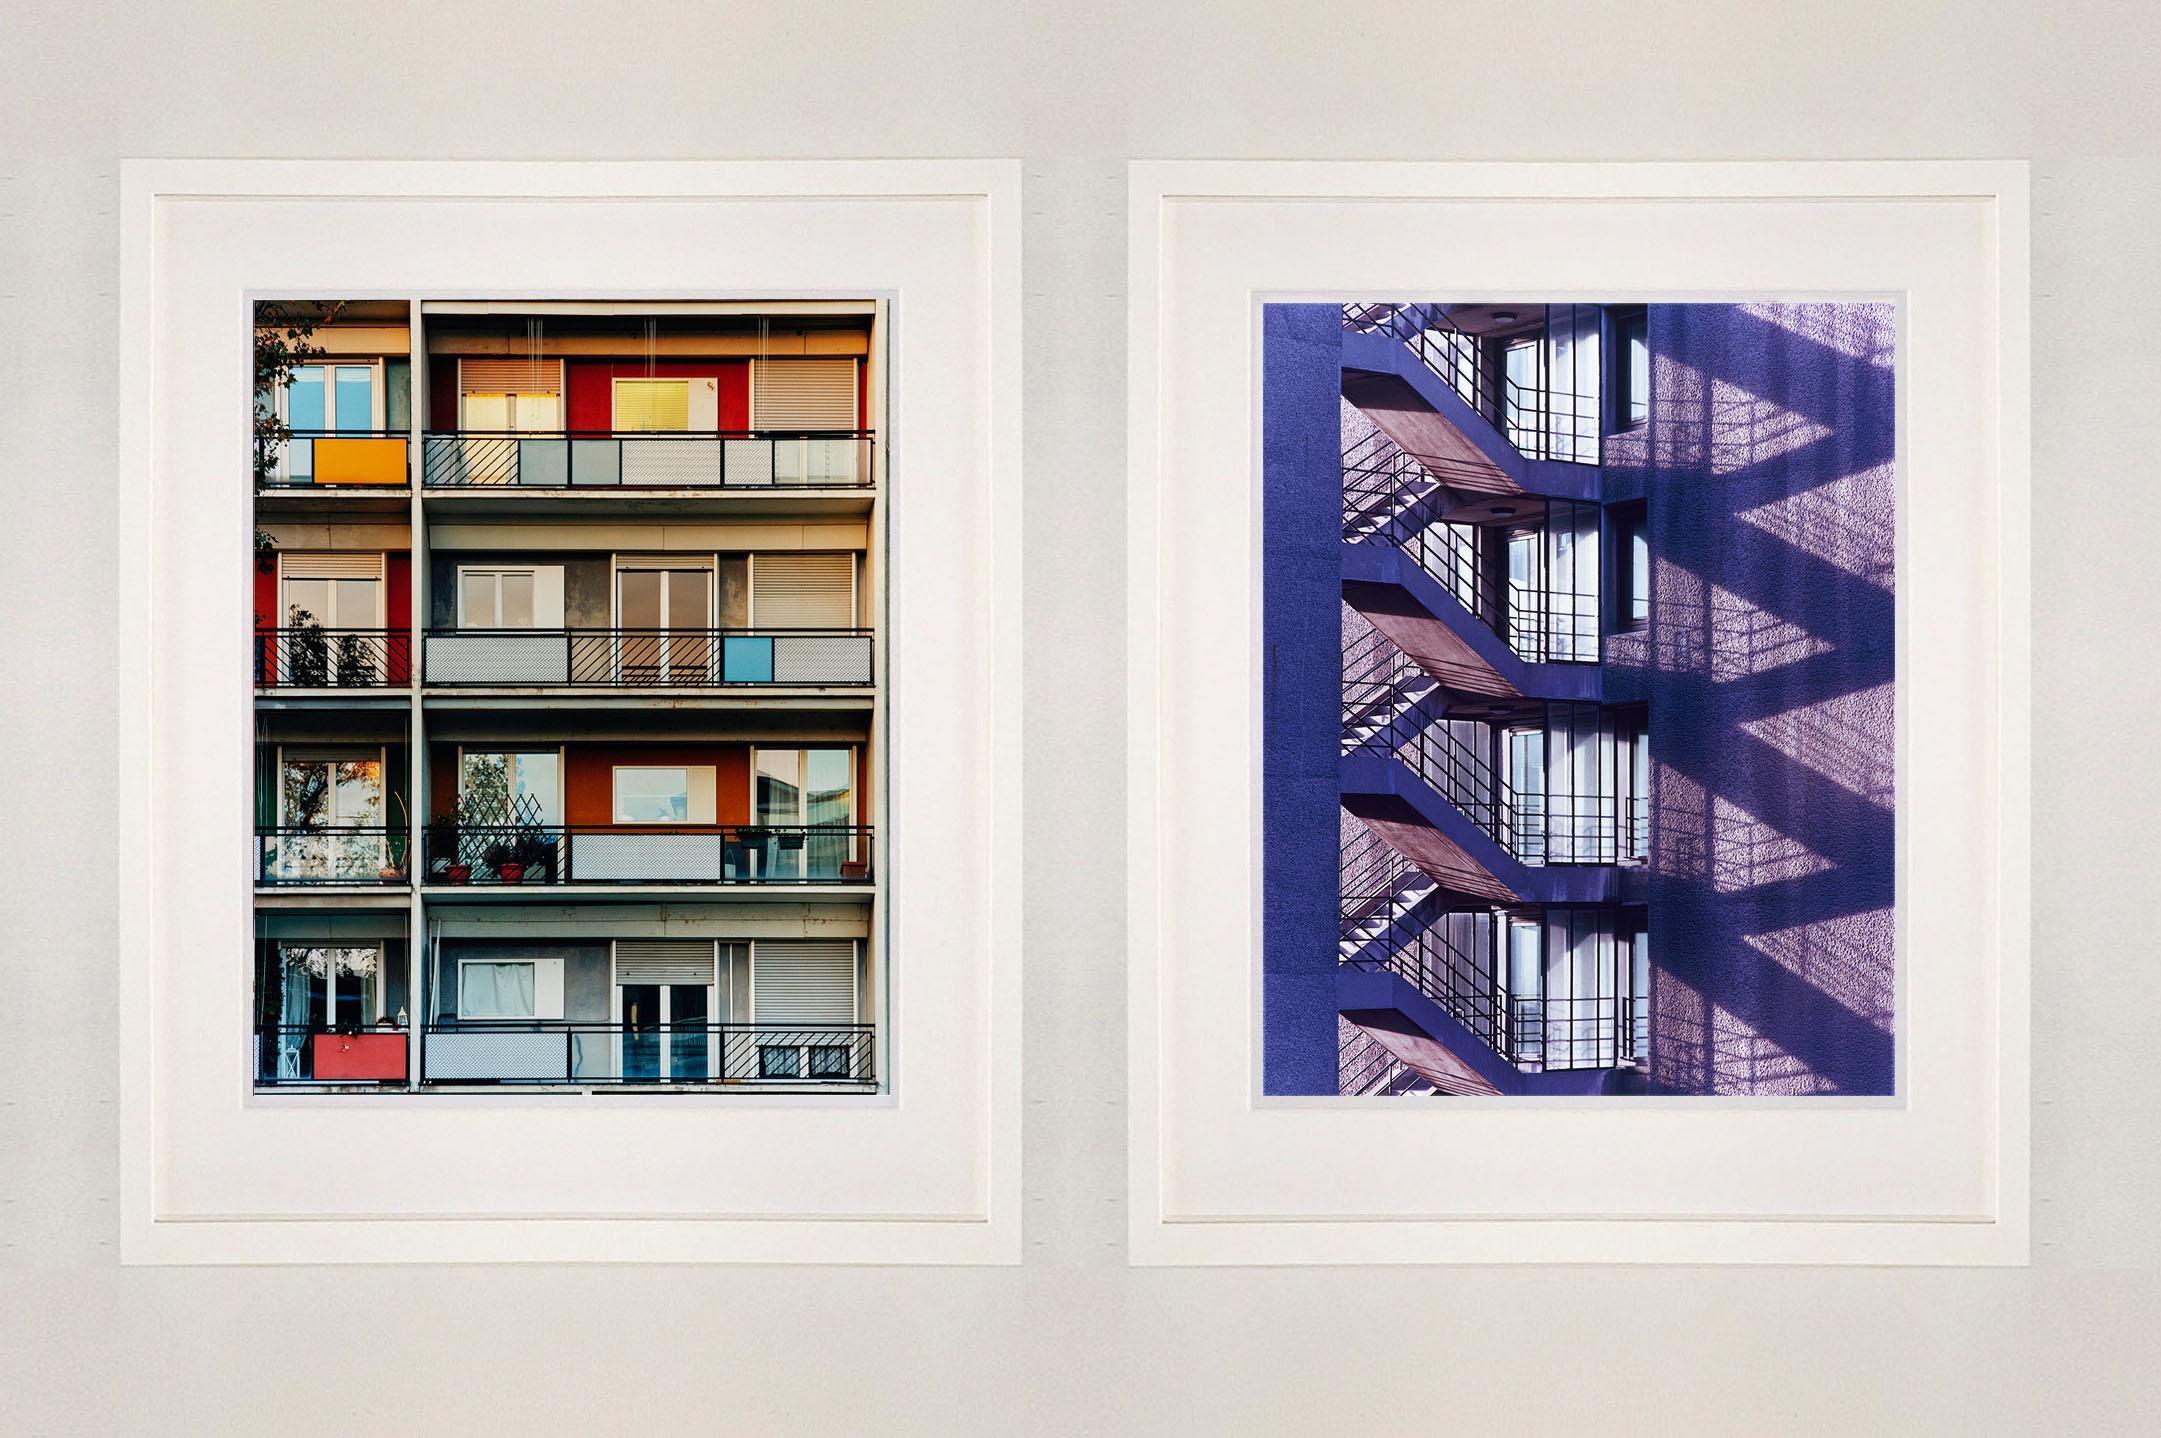 49 Via Dezza bei Sonnenuntergang, Gio Ponti Italienische Architekturfotografie aus Richard Heeps Serie A Short History of Milan. 

A Short History of Milan